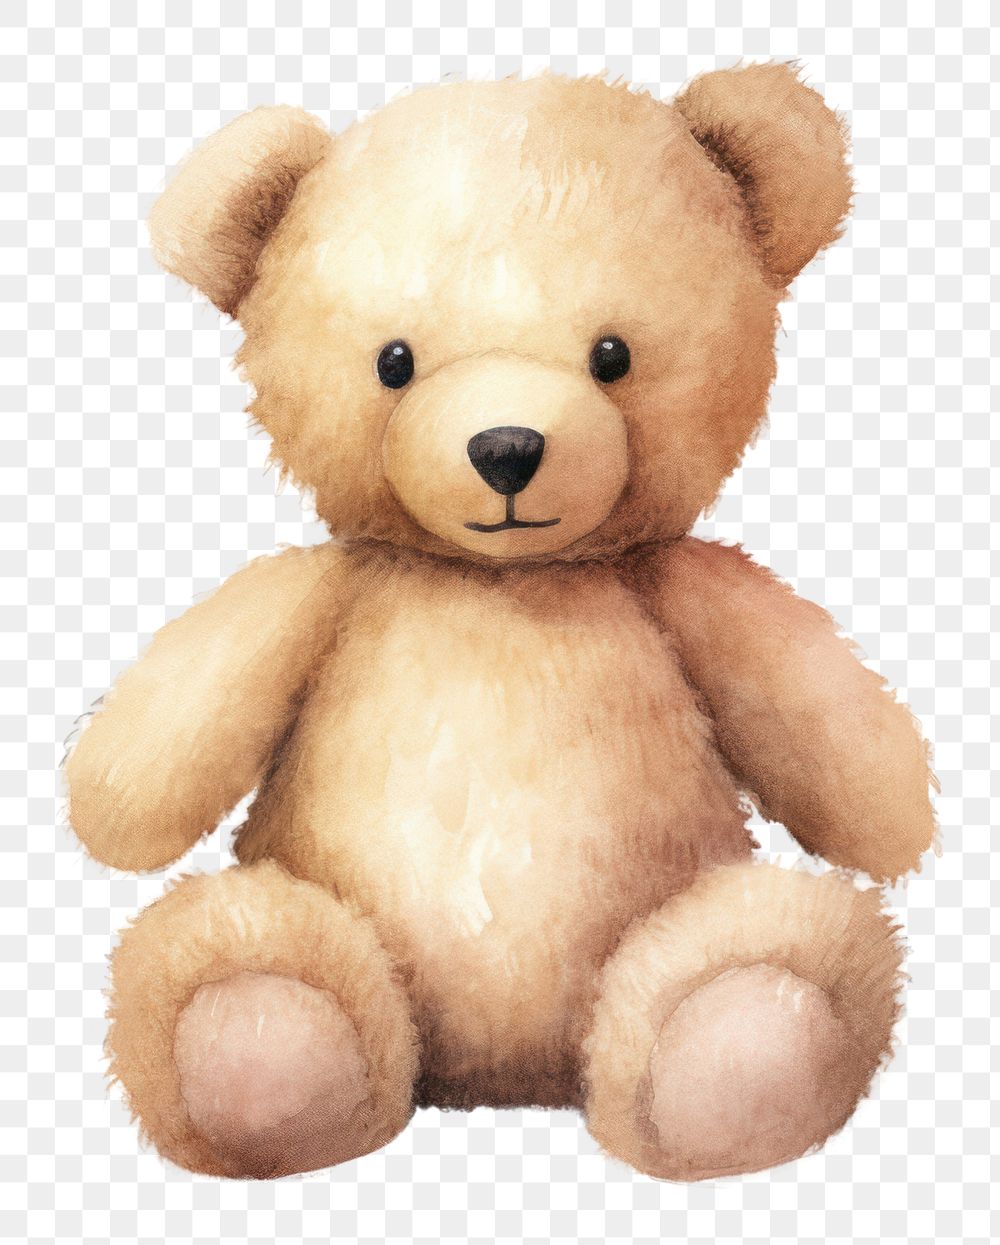 PNG Toy plush bear white background. 